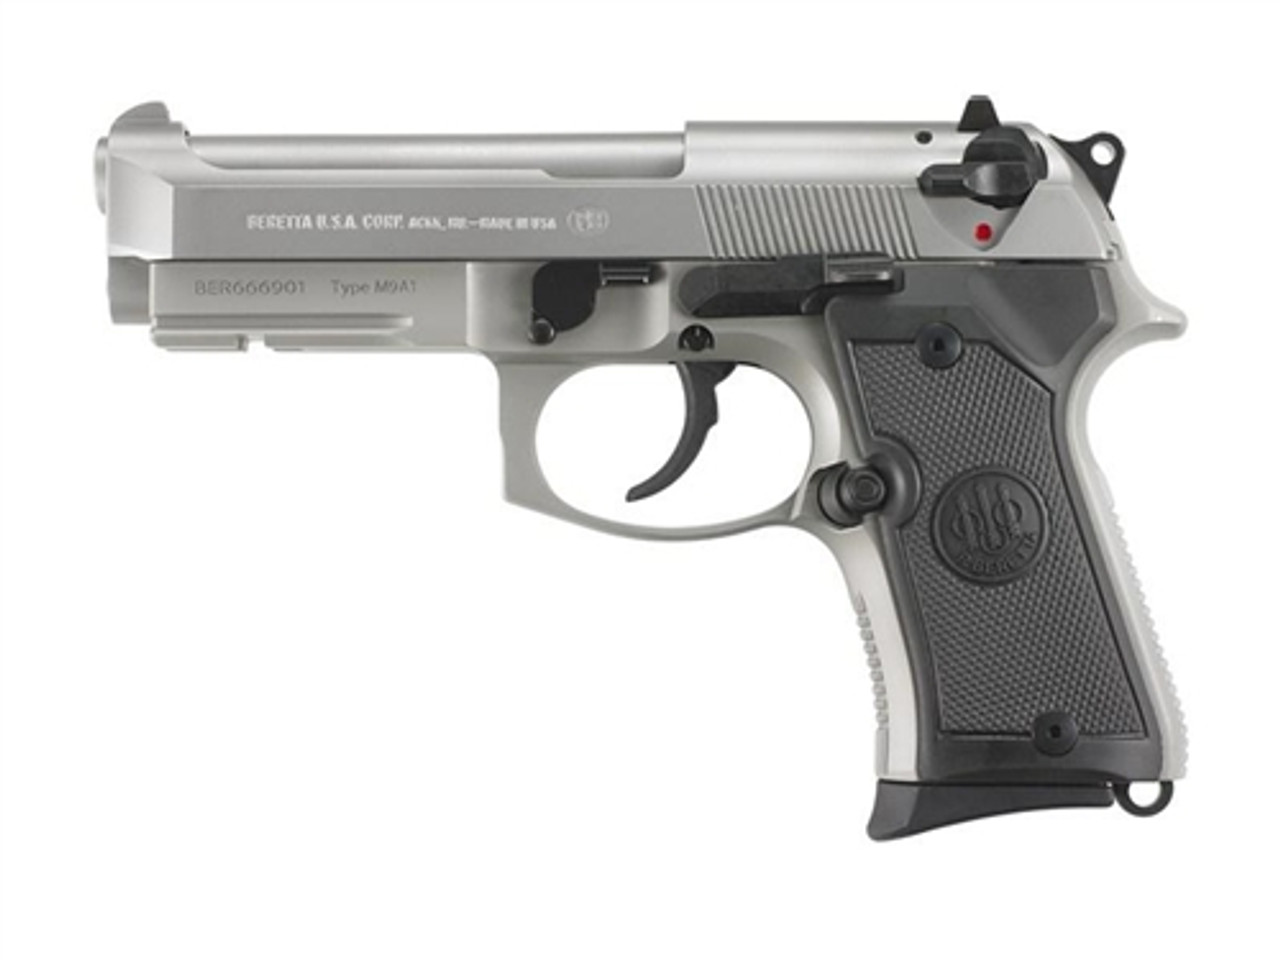 Beretta 92FS Type M9A1 Compact Inox 9mm Semi Auto Pistol w/ 2 Magazines